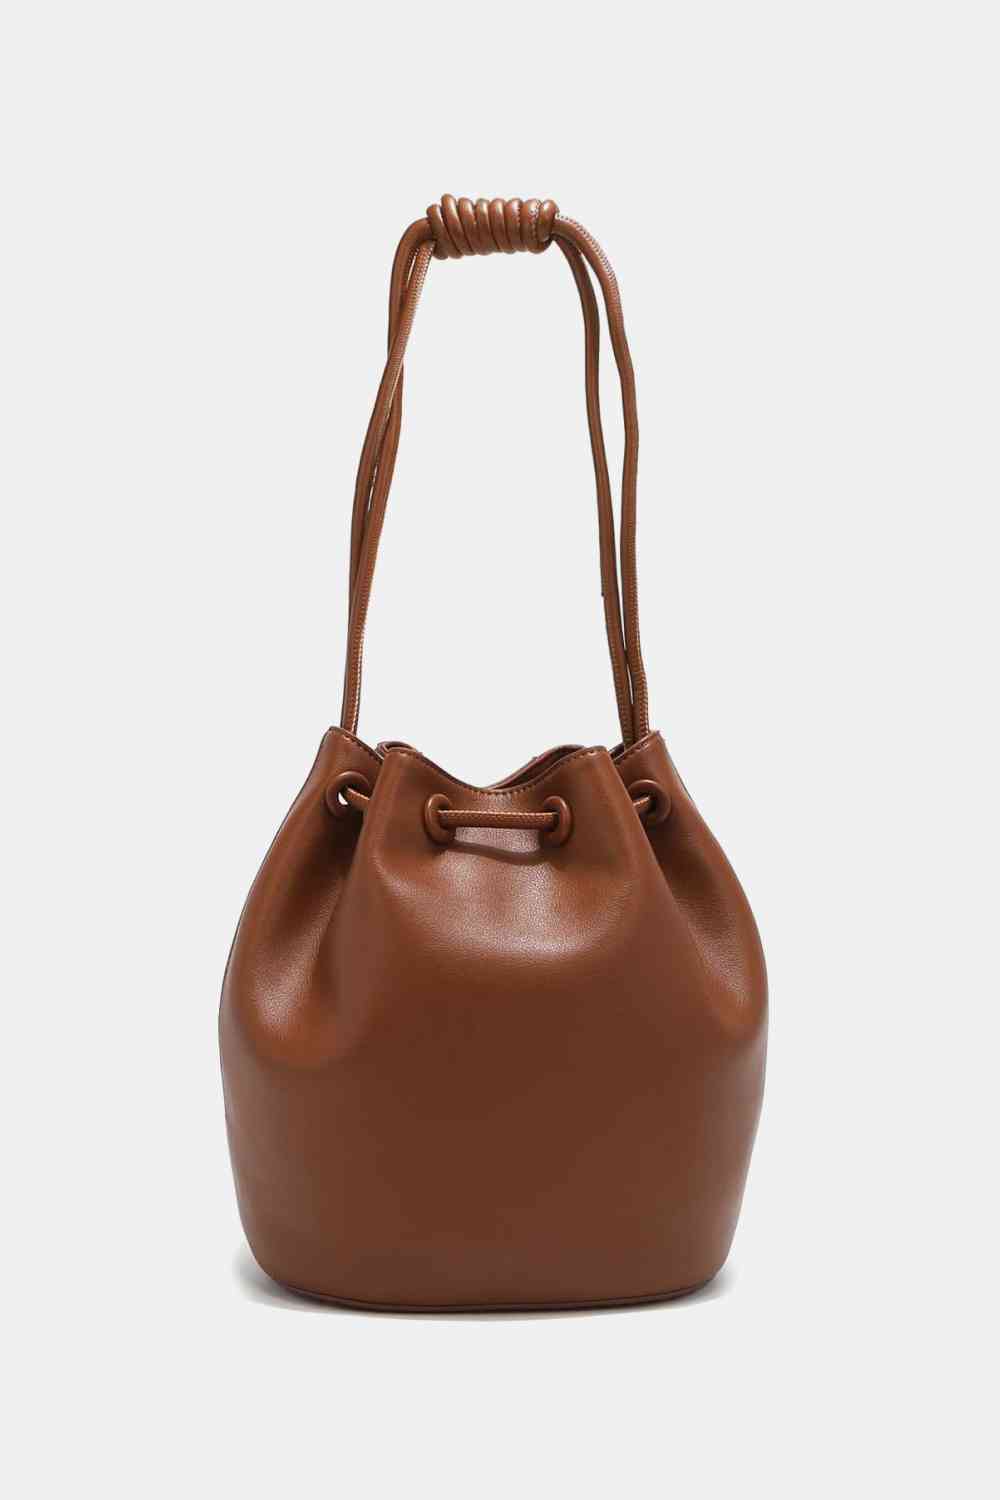 Nicole Lee USA Amy Studded Bucket Bag | Vegan Leather Women's Handbag